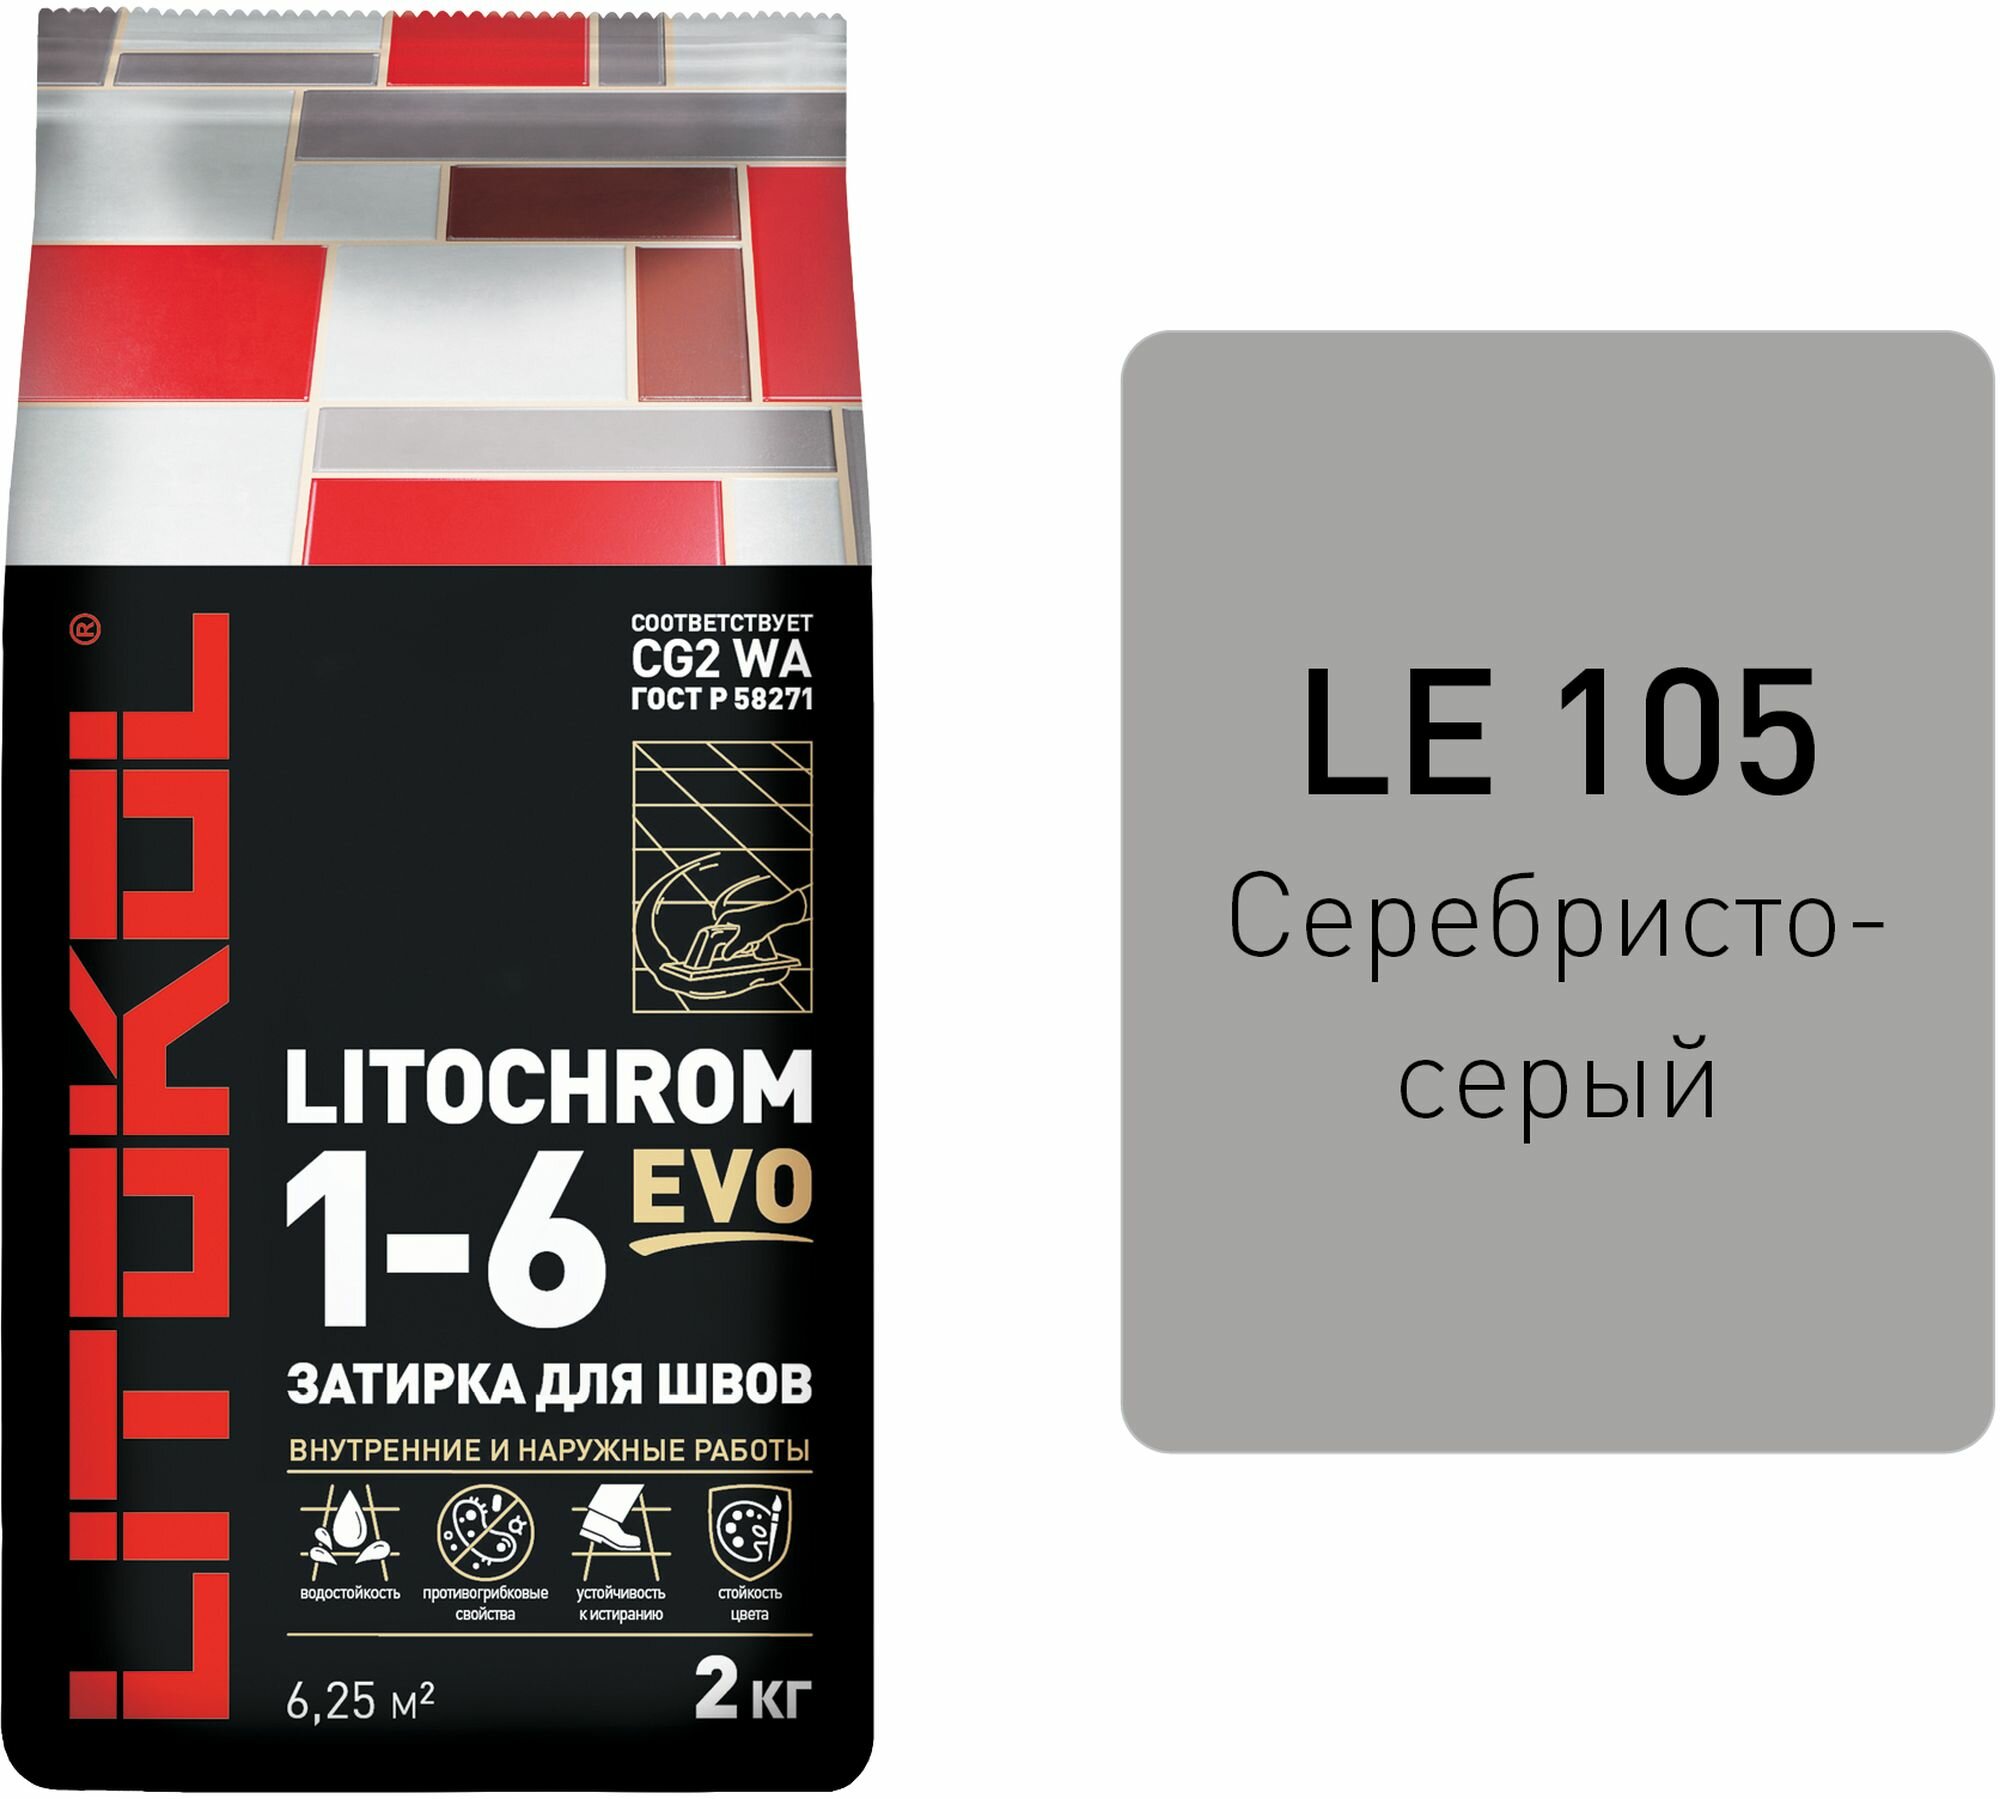 Цементная затирка LITOKOL LITOCHROM 1-6 EVO